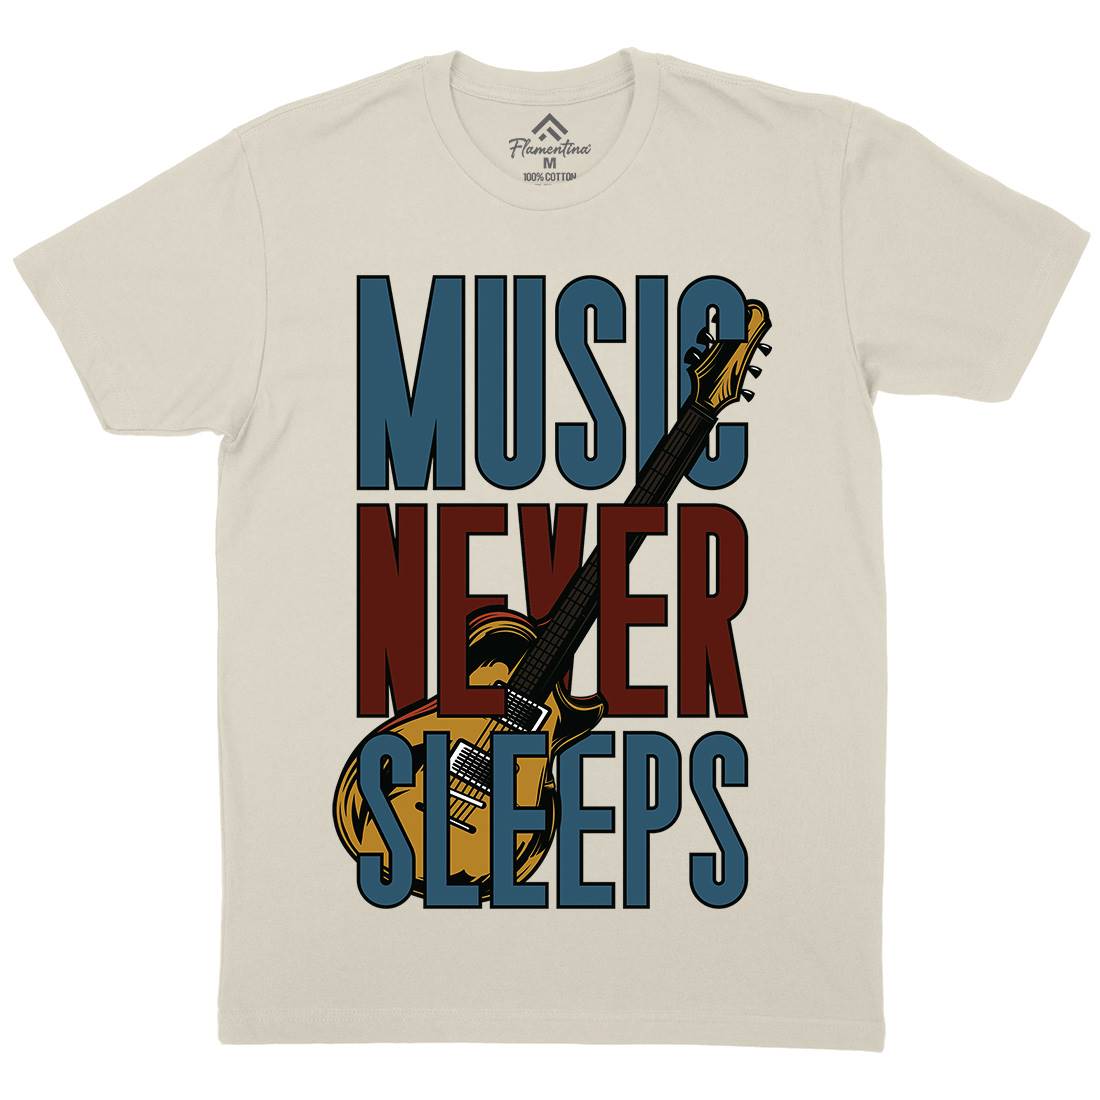 Never Sleeps Mens Organic Crew Neck T-Shirt Music C865